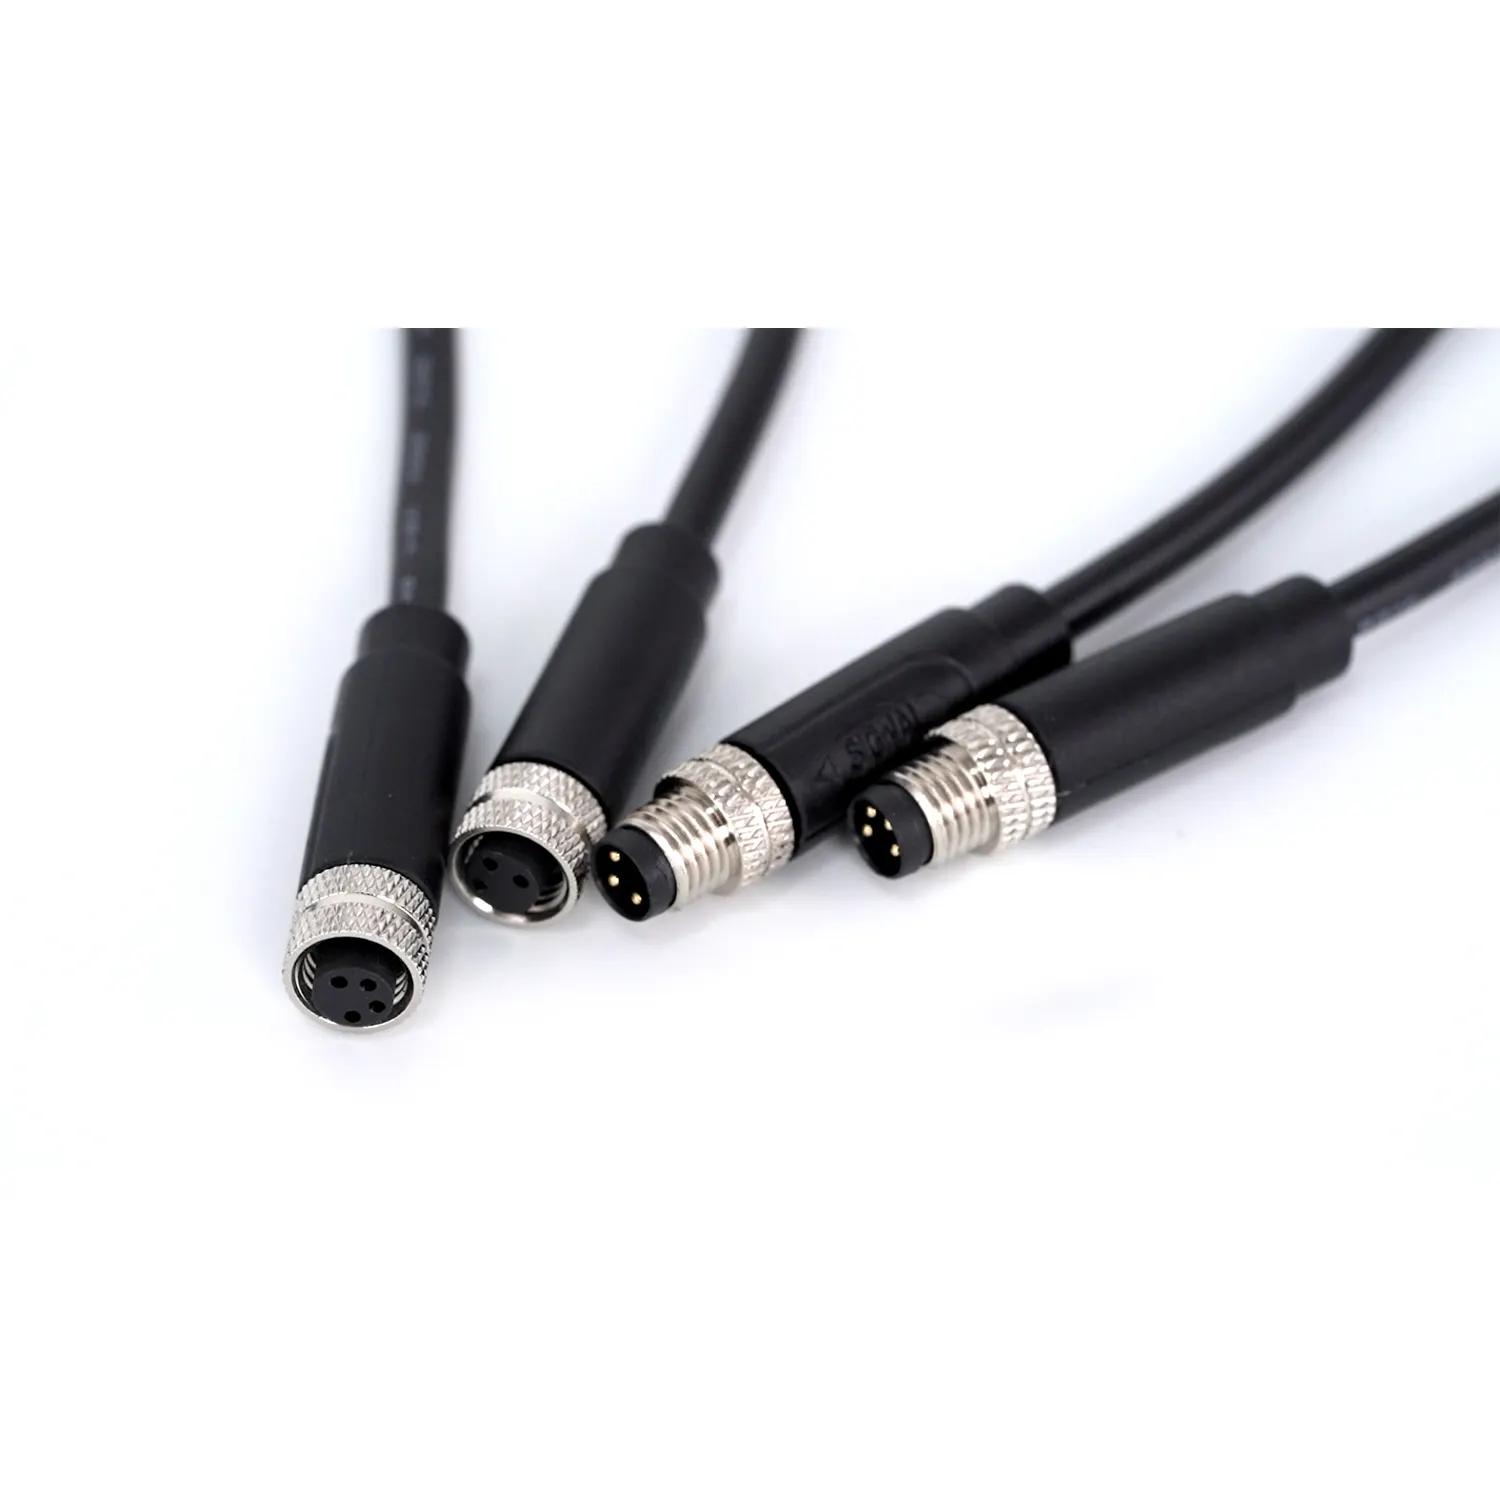 Cavi Ethernet industriali impermeabili serie M8 costruiti in PVC/PUR giacca schermato cavo con connettore femmina serie M8